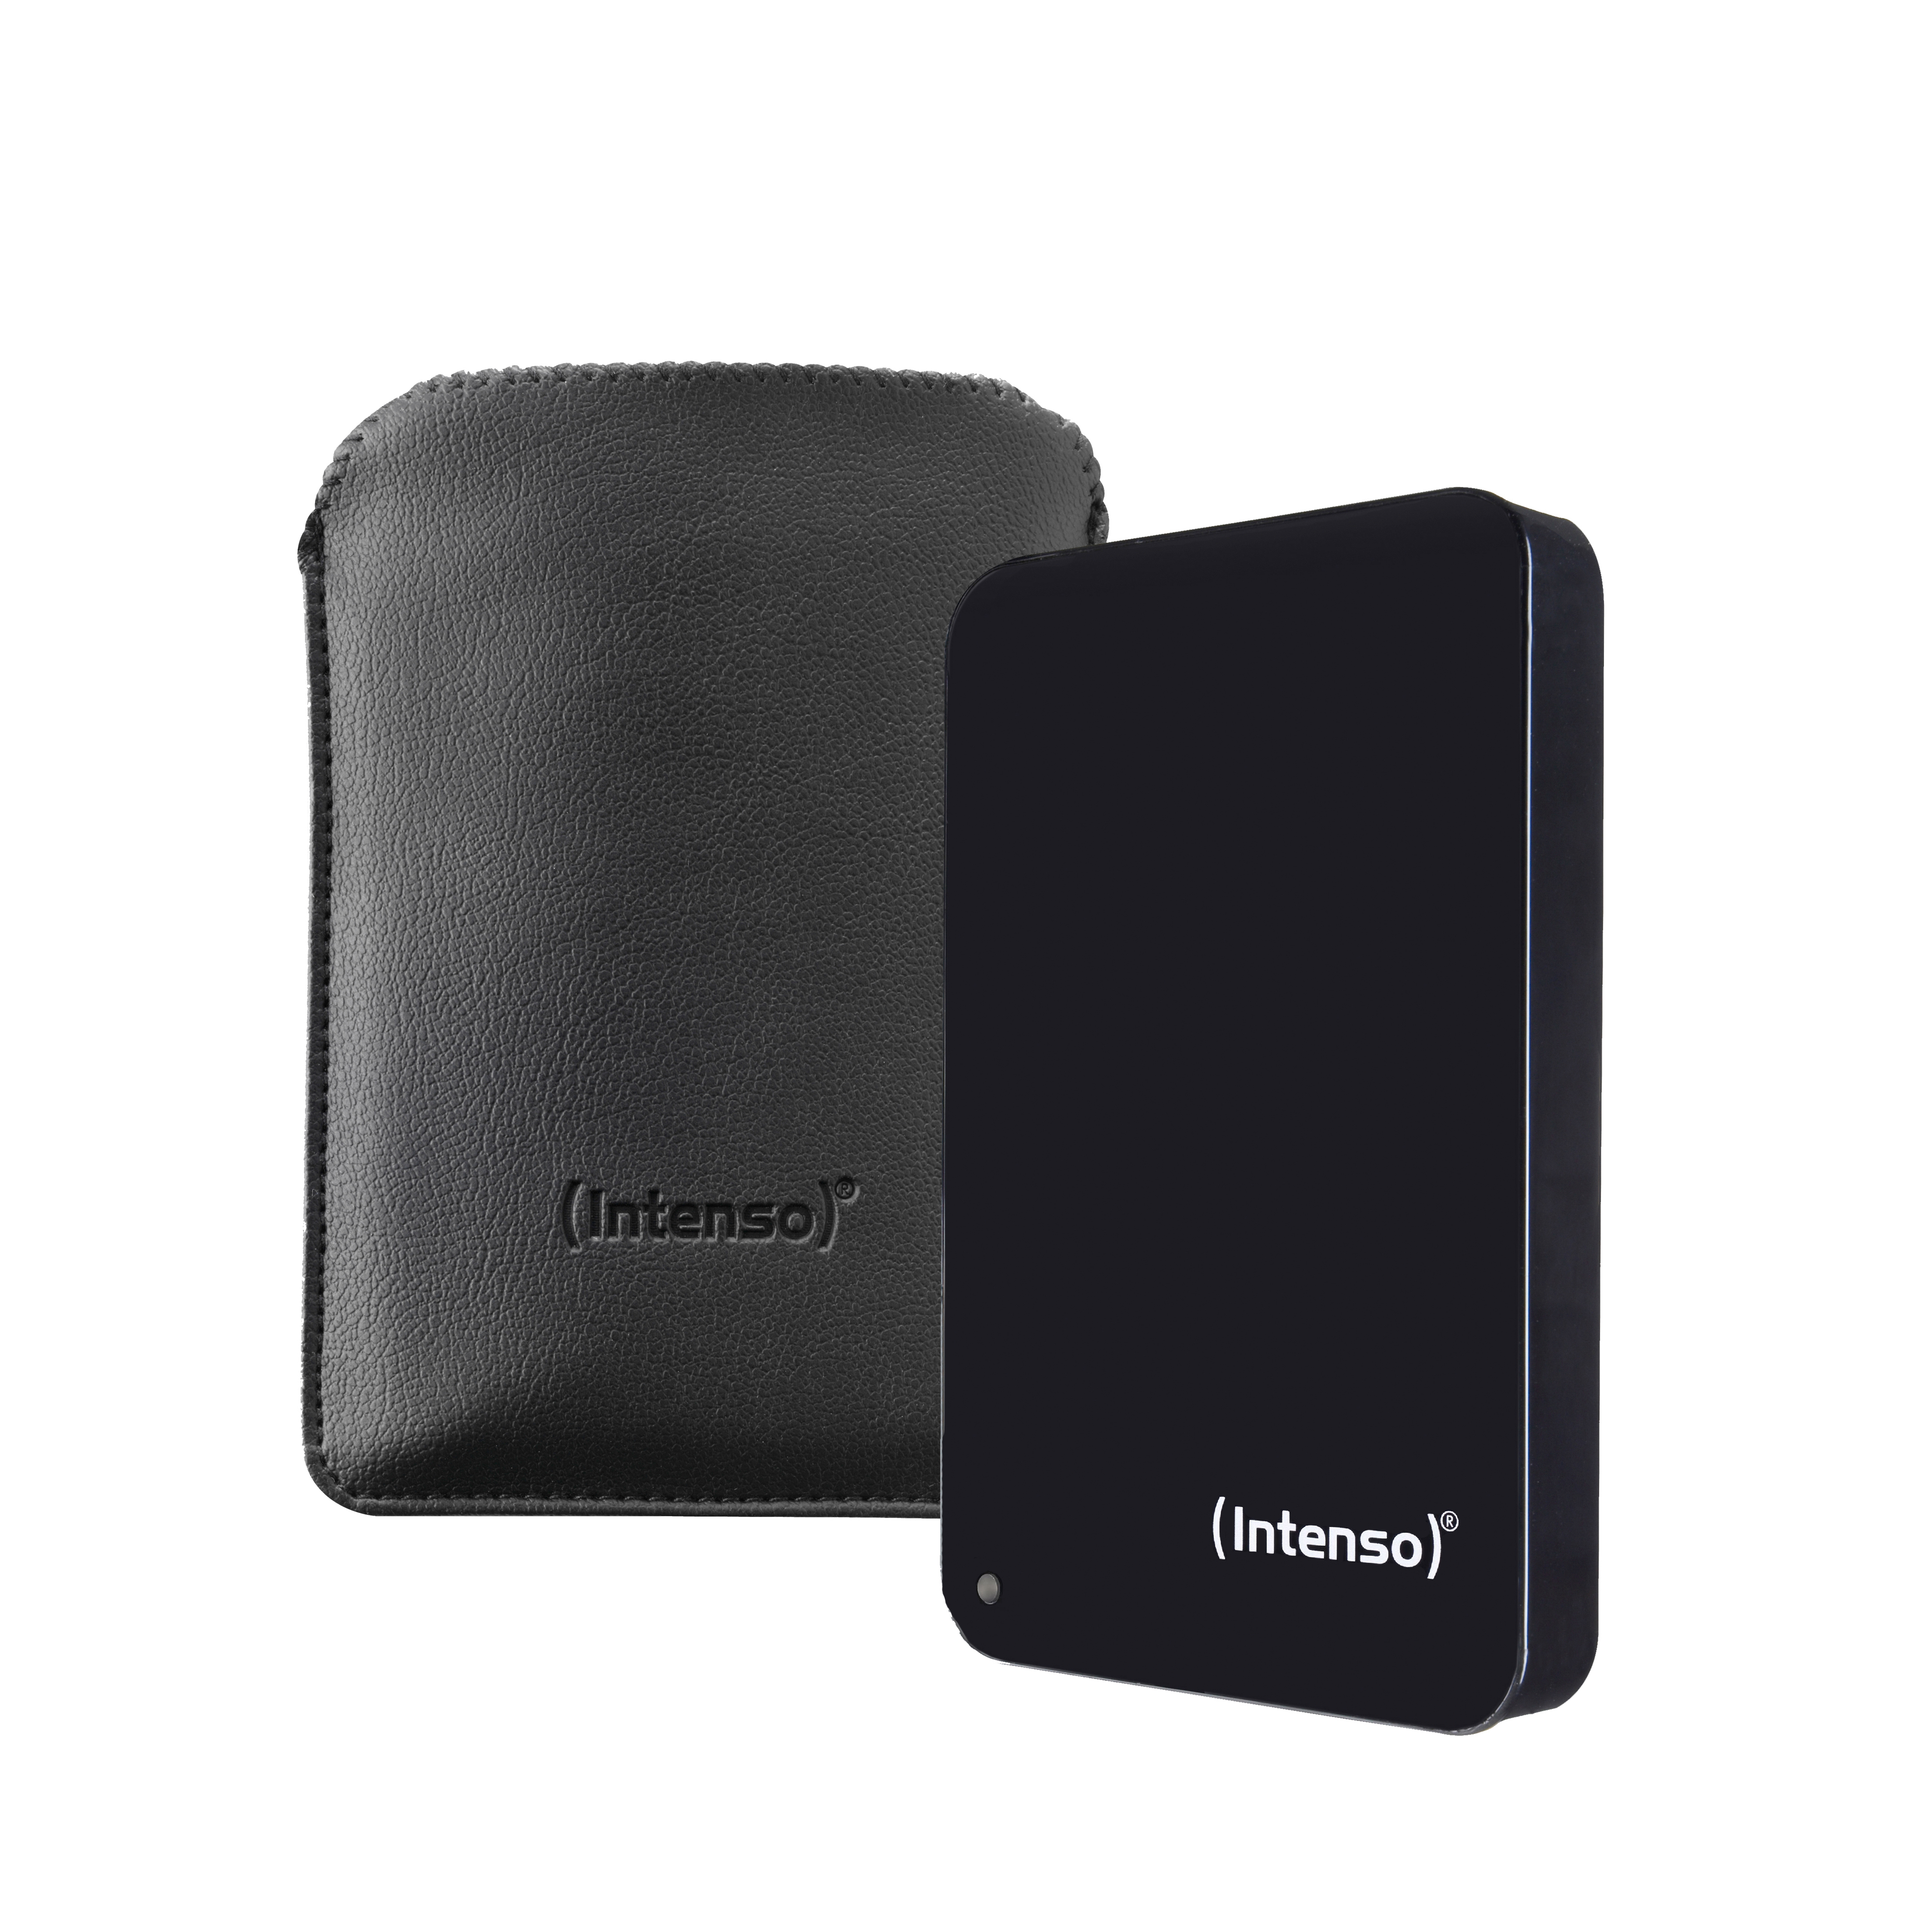 Intenso Memory Drive - Festplatte - 1 TB - extern (tragbar)